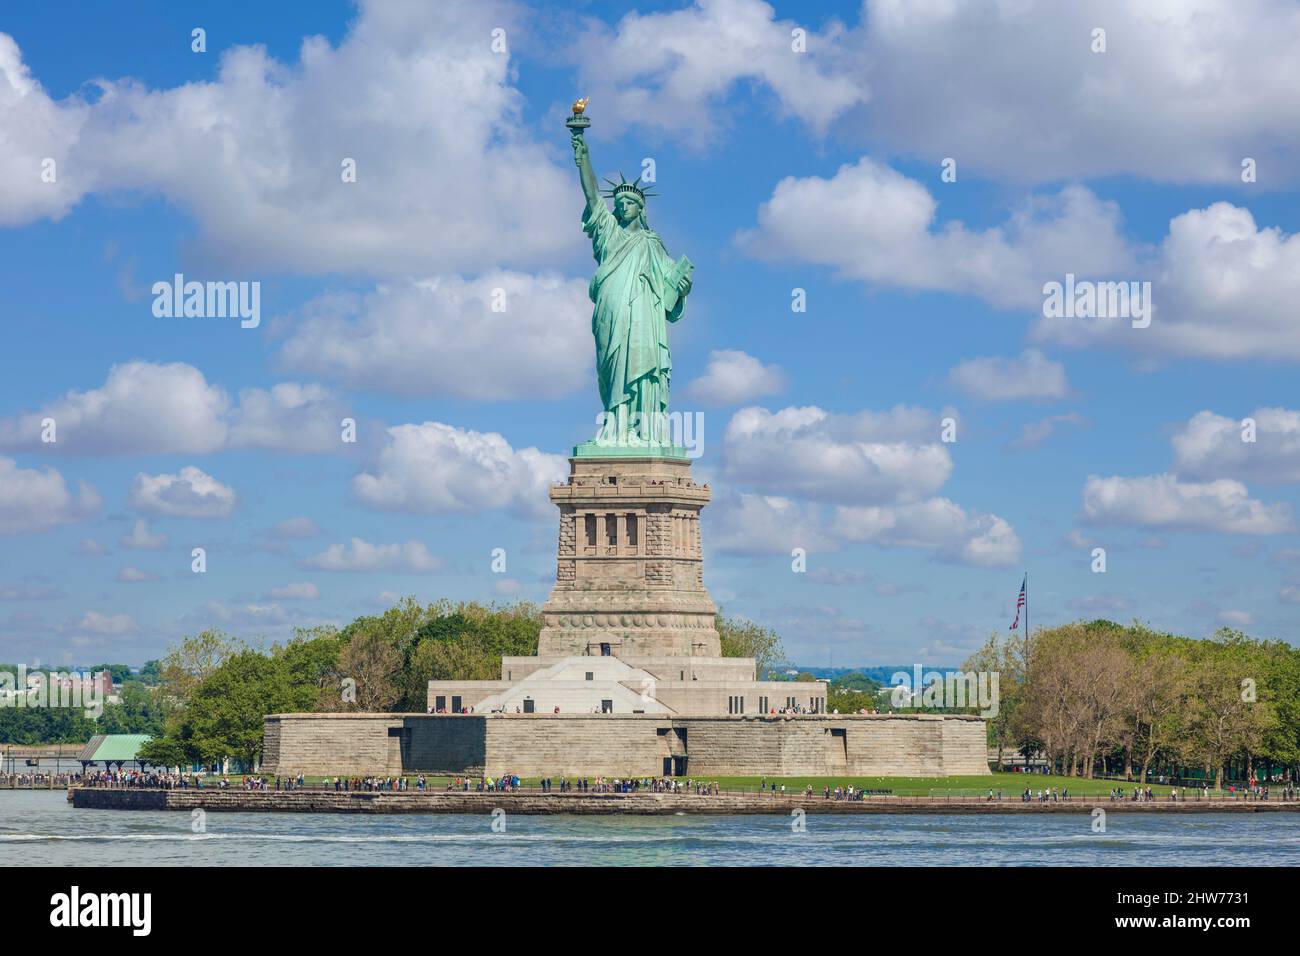 Estatua de la Libertad Nueva York Estatua de la Libertad Ciudad de Nueva York Estatua de la Libertad Isla de Nueva york Estados unidos de américa cielo azul nubes blancas Foto de stock